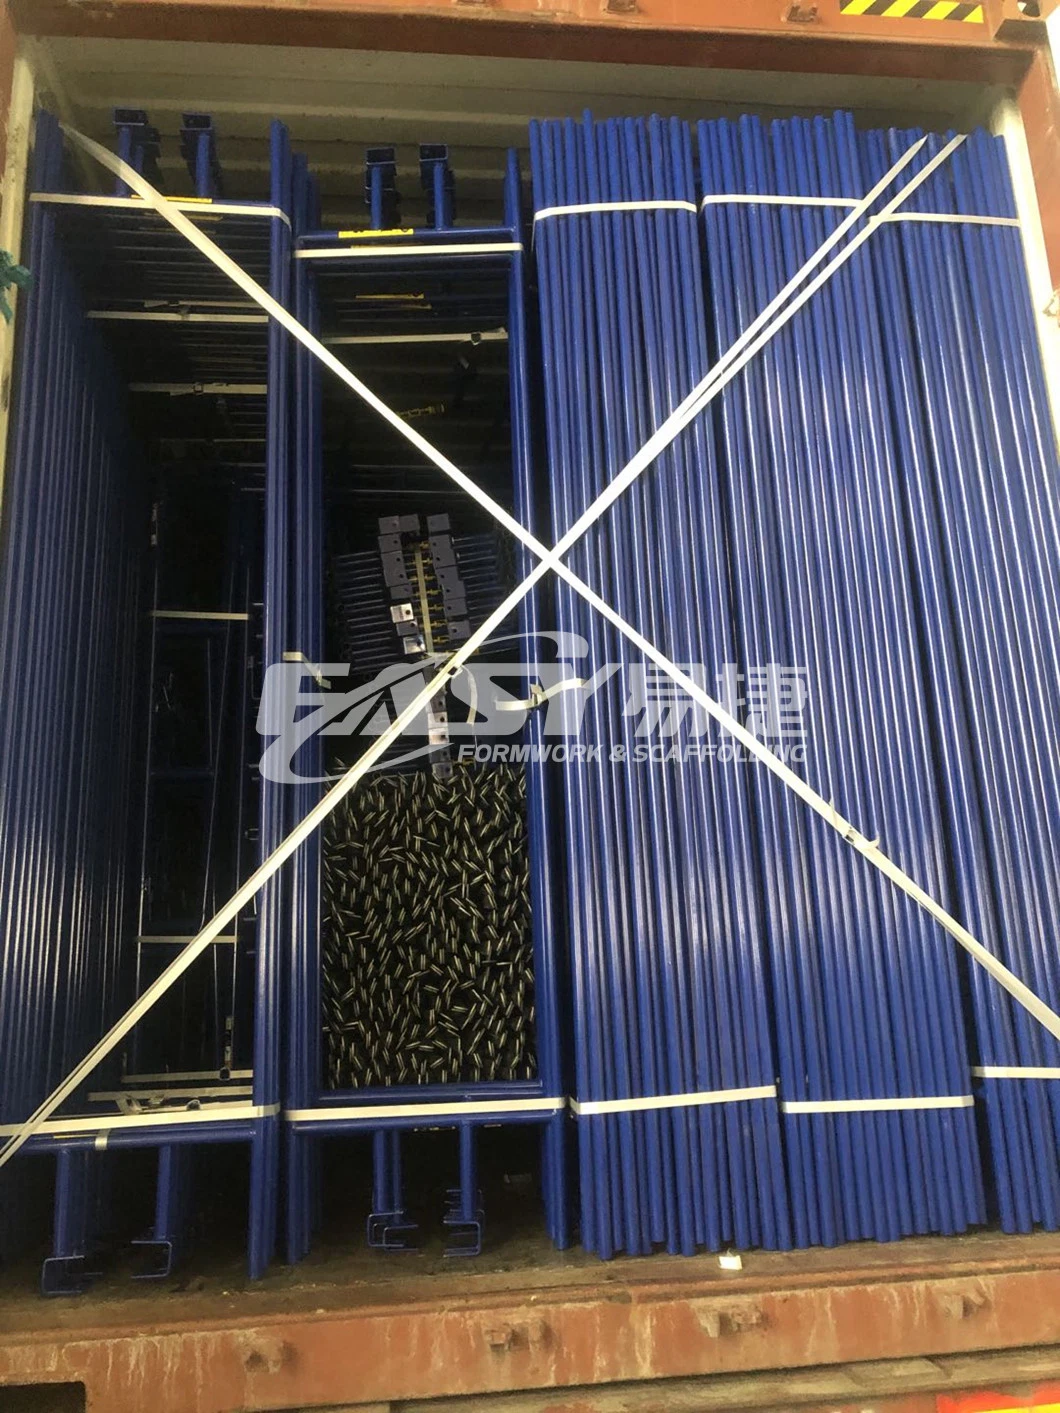 Easy Scaffolding Powder Coated Blue Red Black Main Fame Scaffolding Narrow Ladder Frame